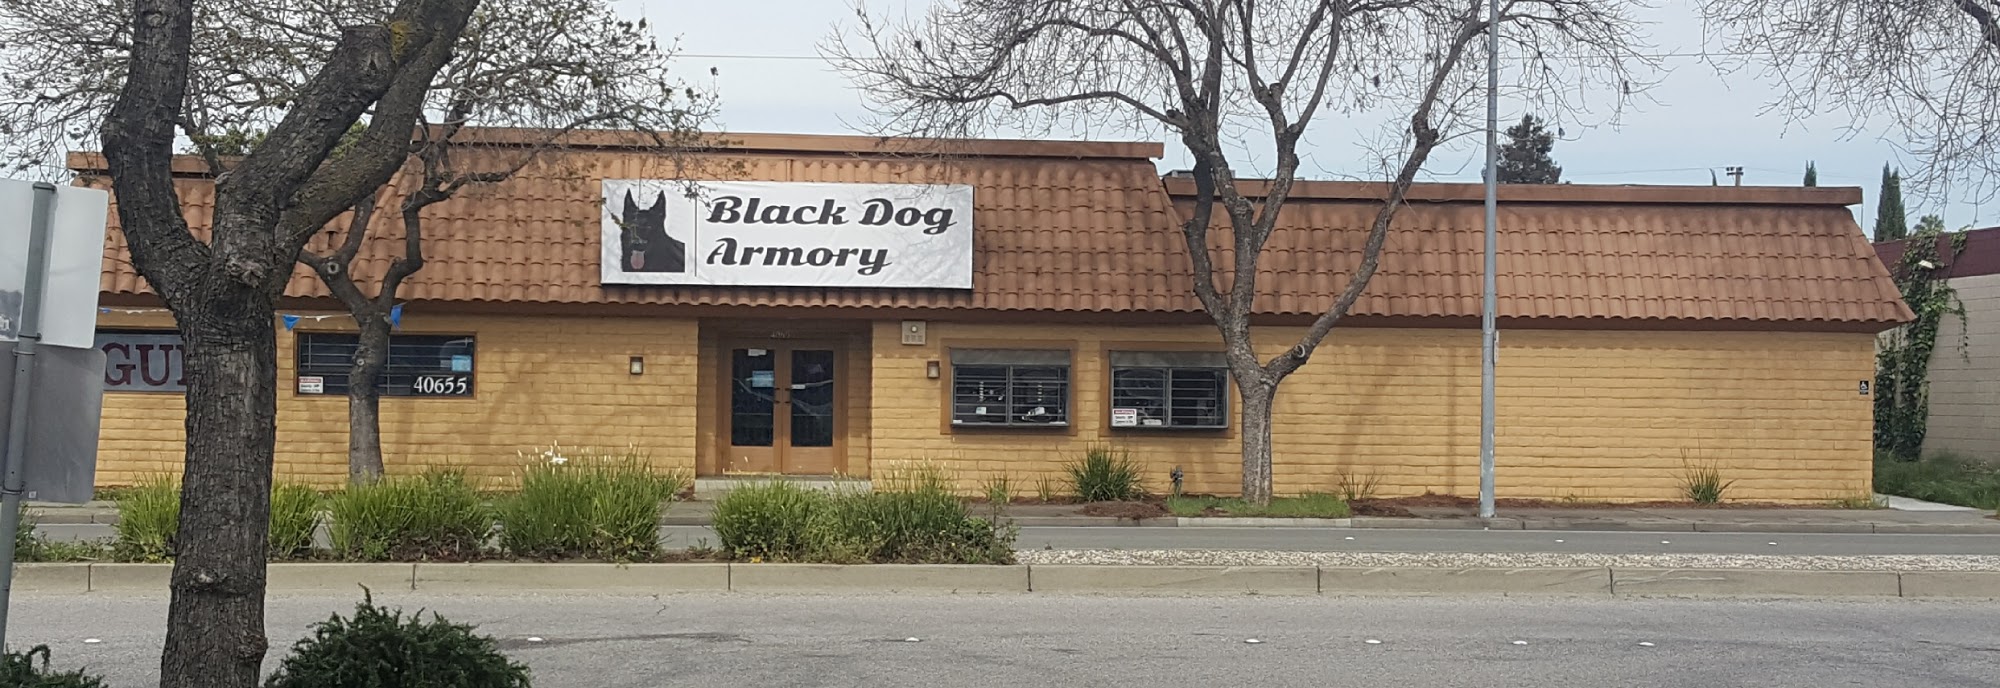 Black Dog Armory